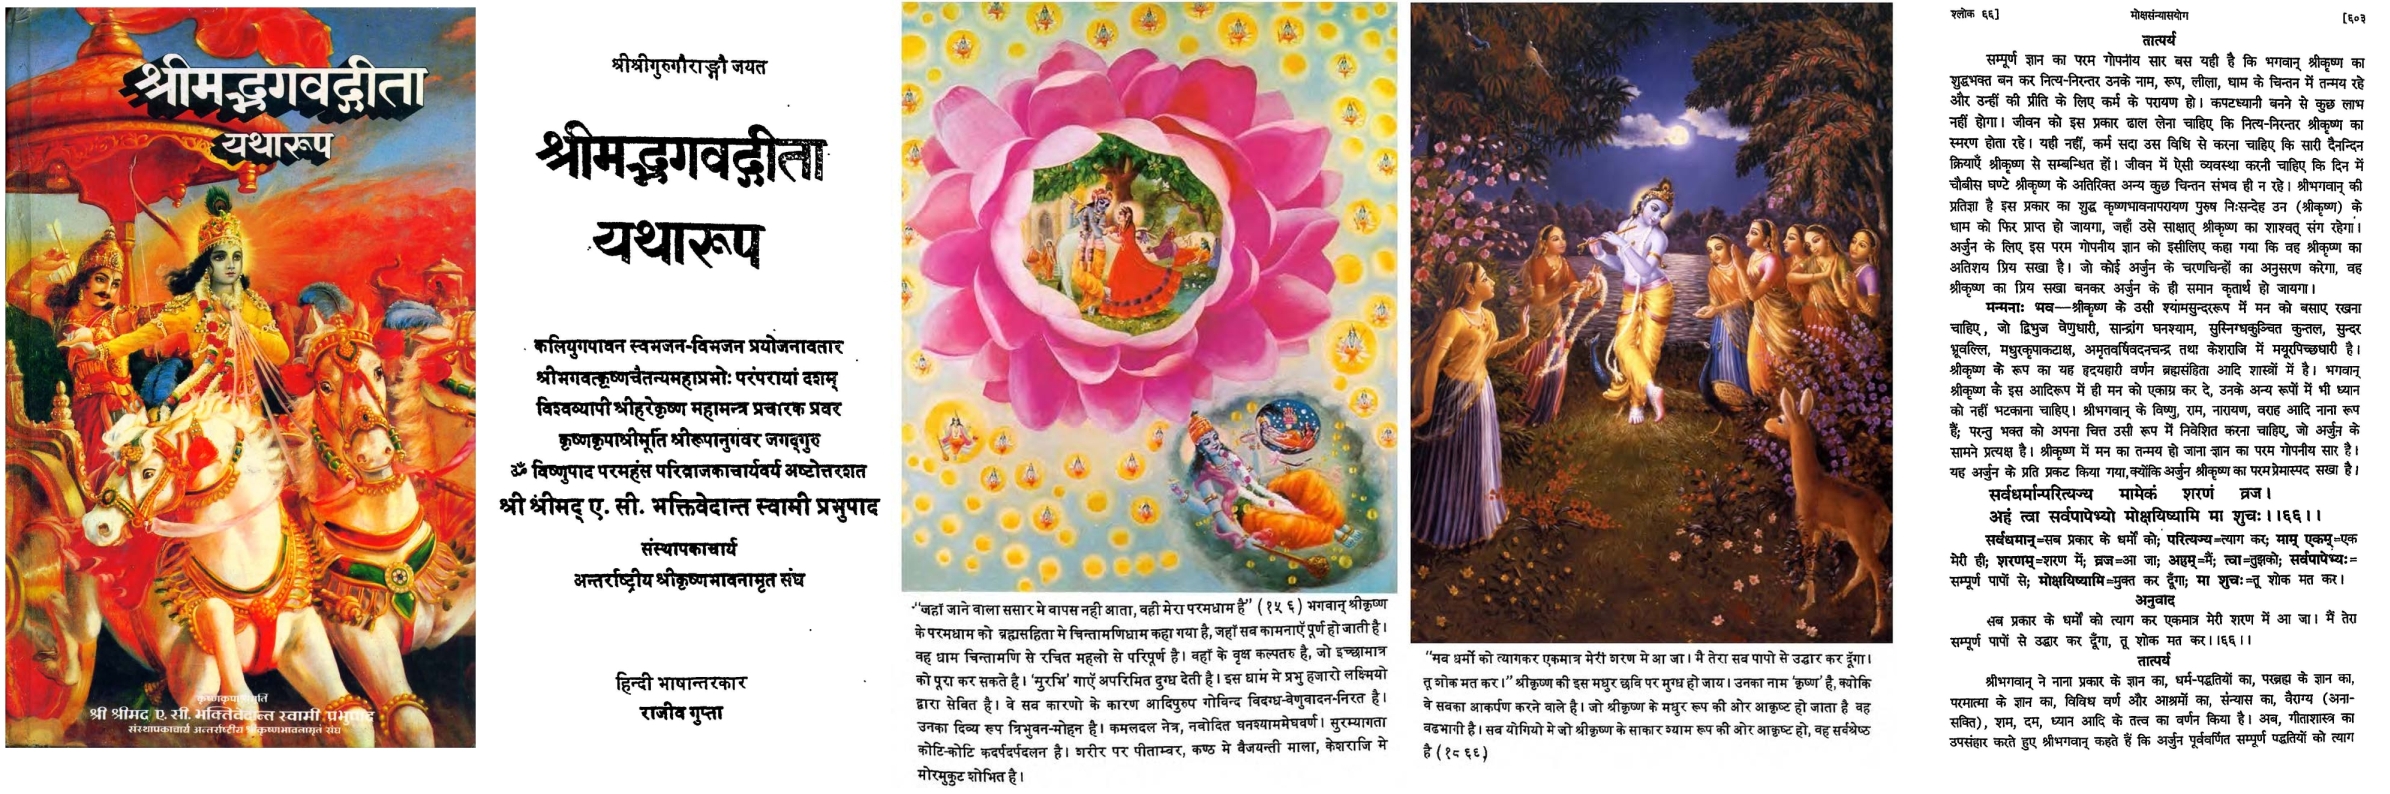 Gita in hindi pdf